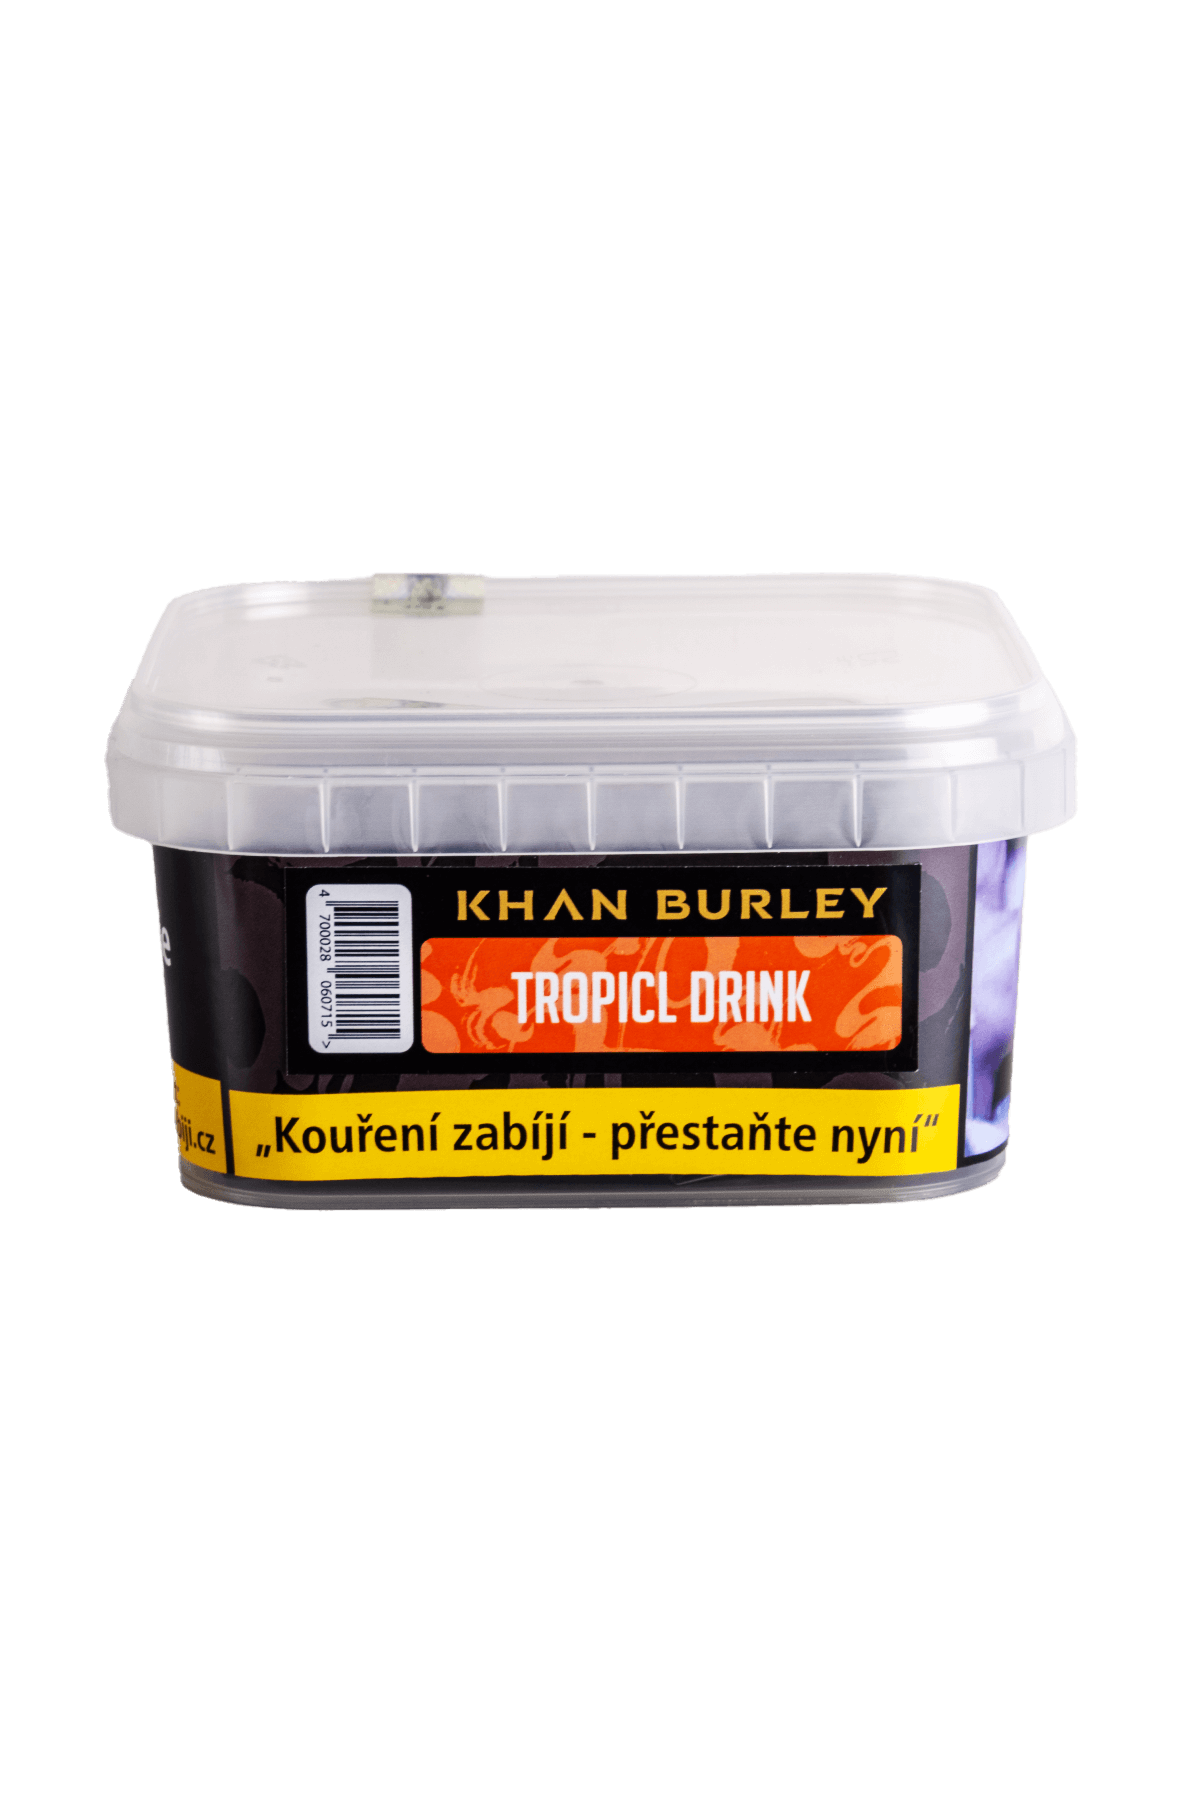 Tabák - Khan Burley 250g - Tropical Drink